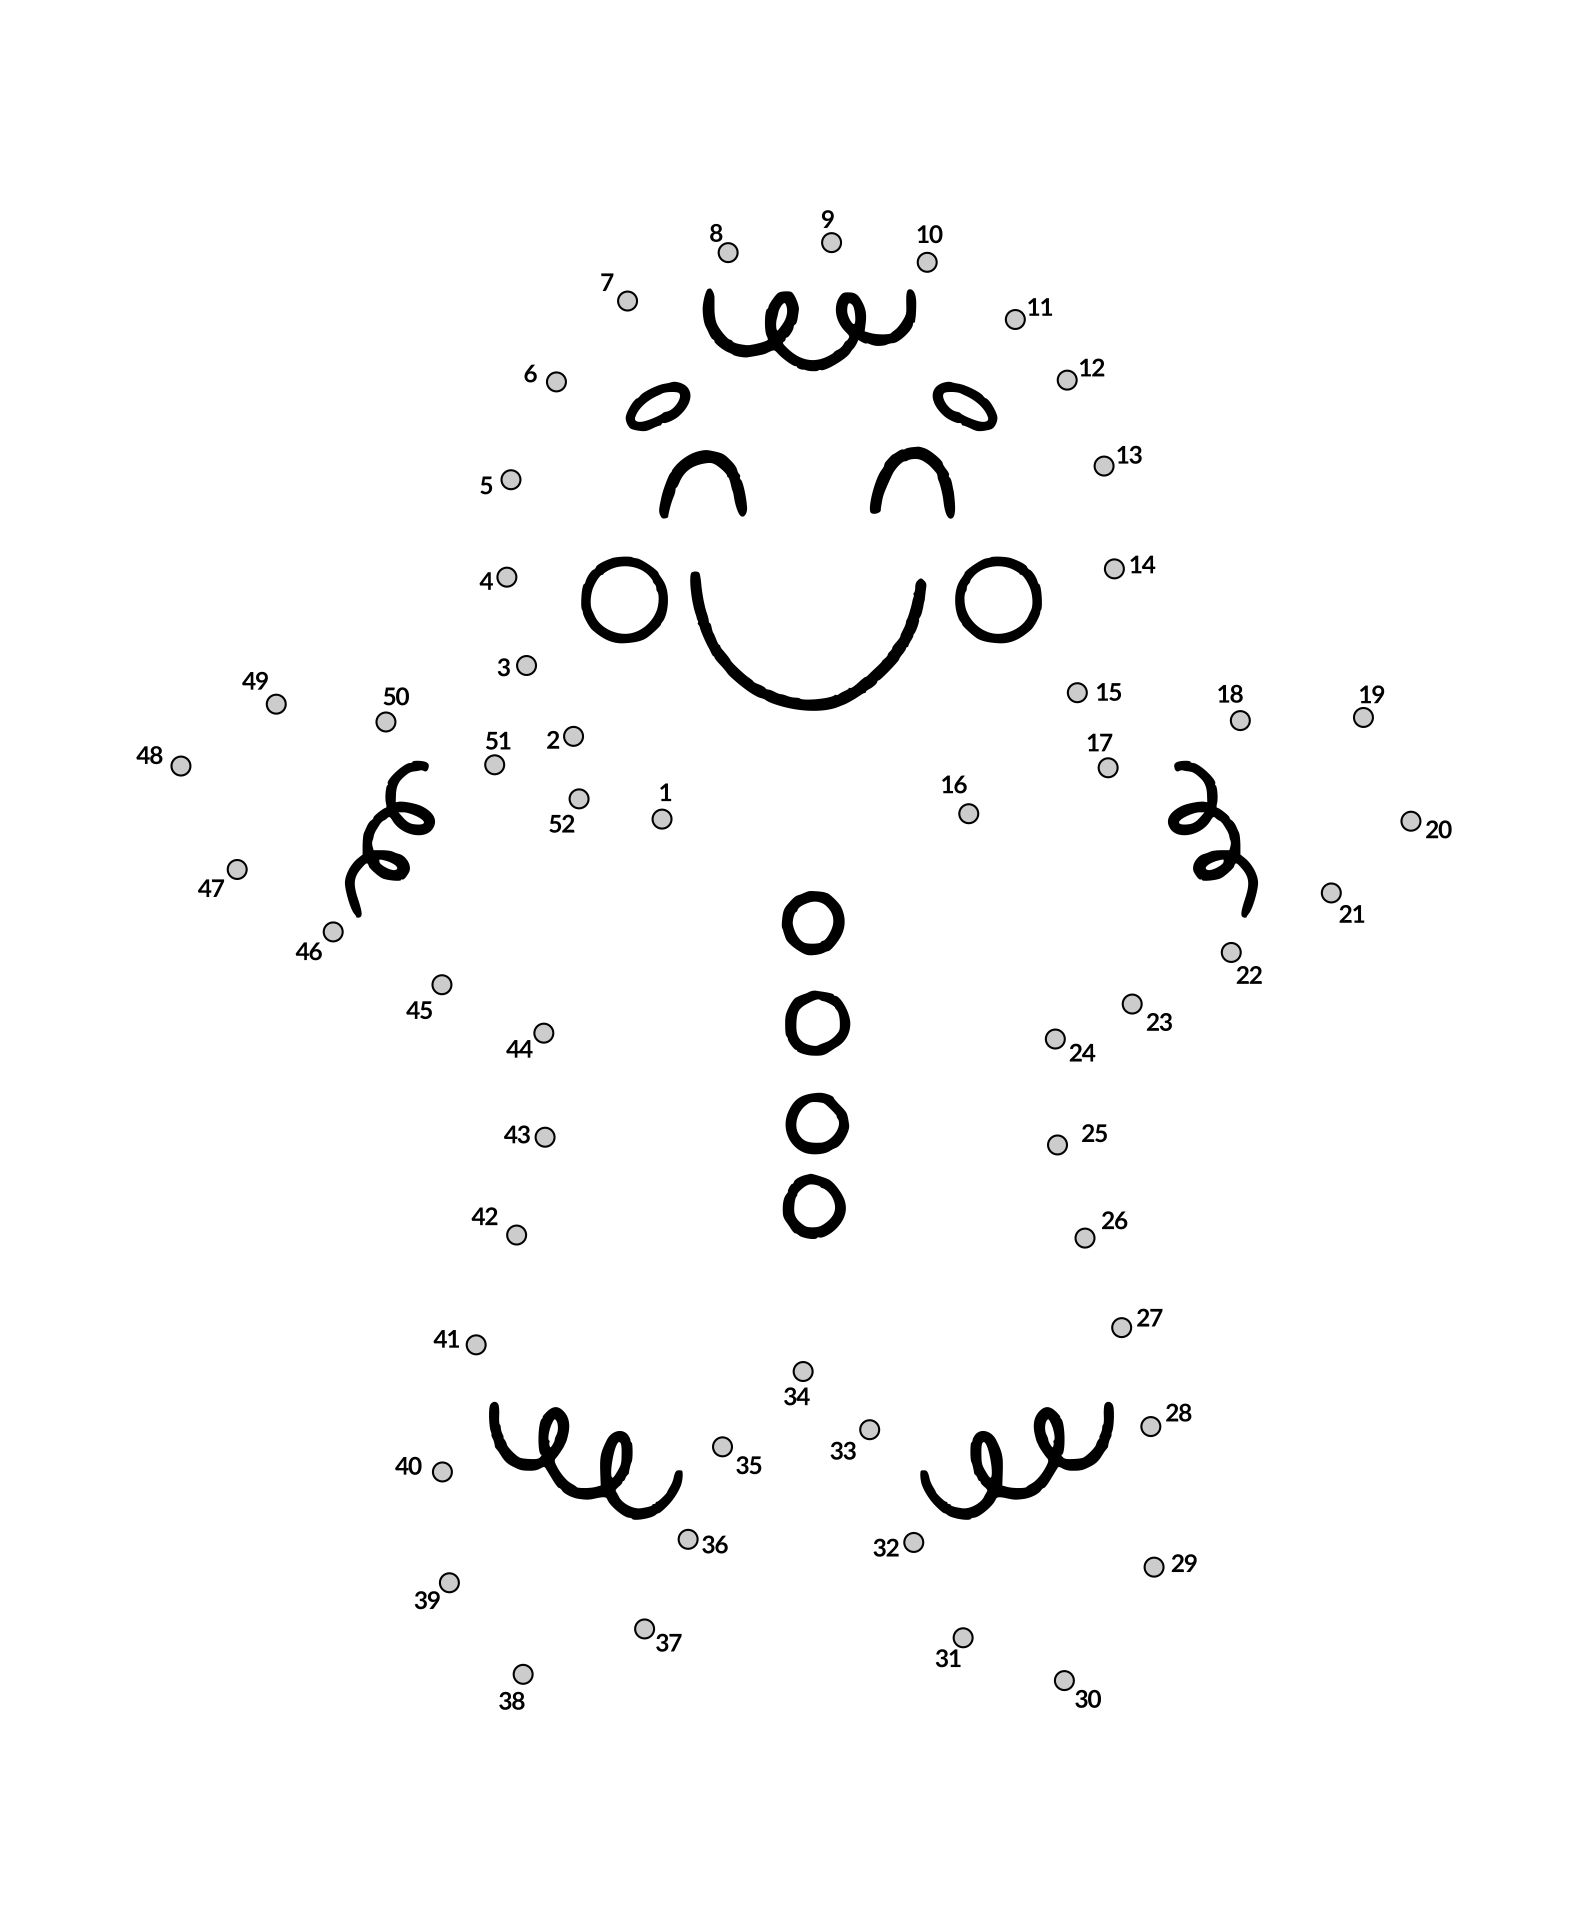 Preschool Dot to Dot Gingerbread Man